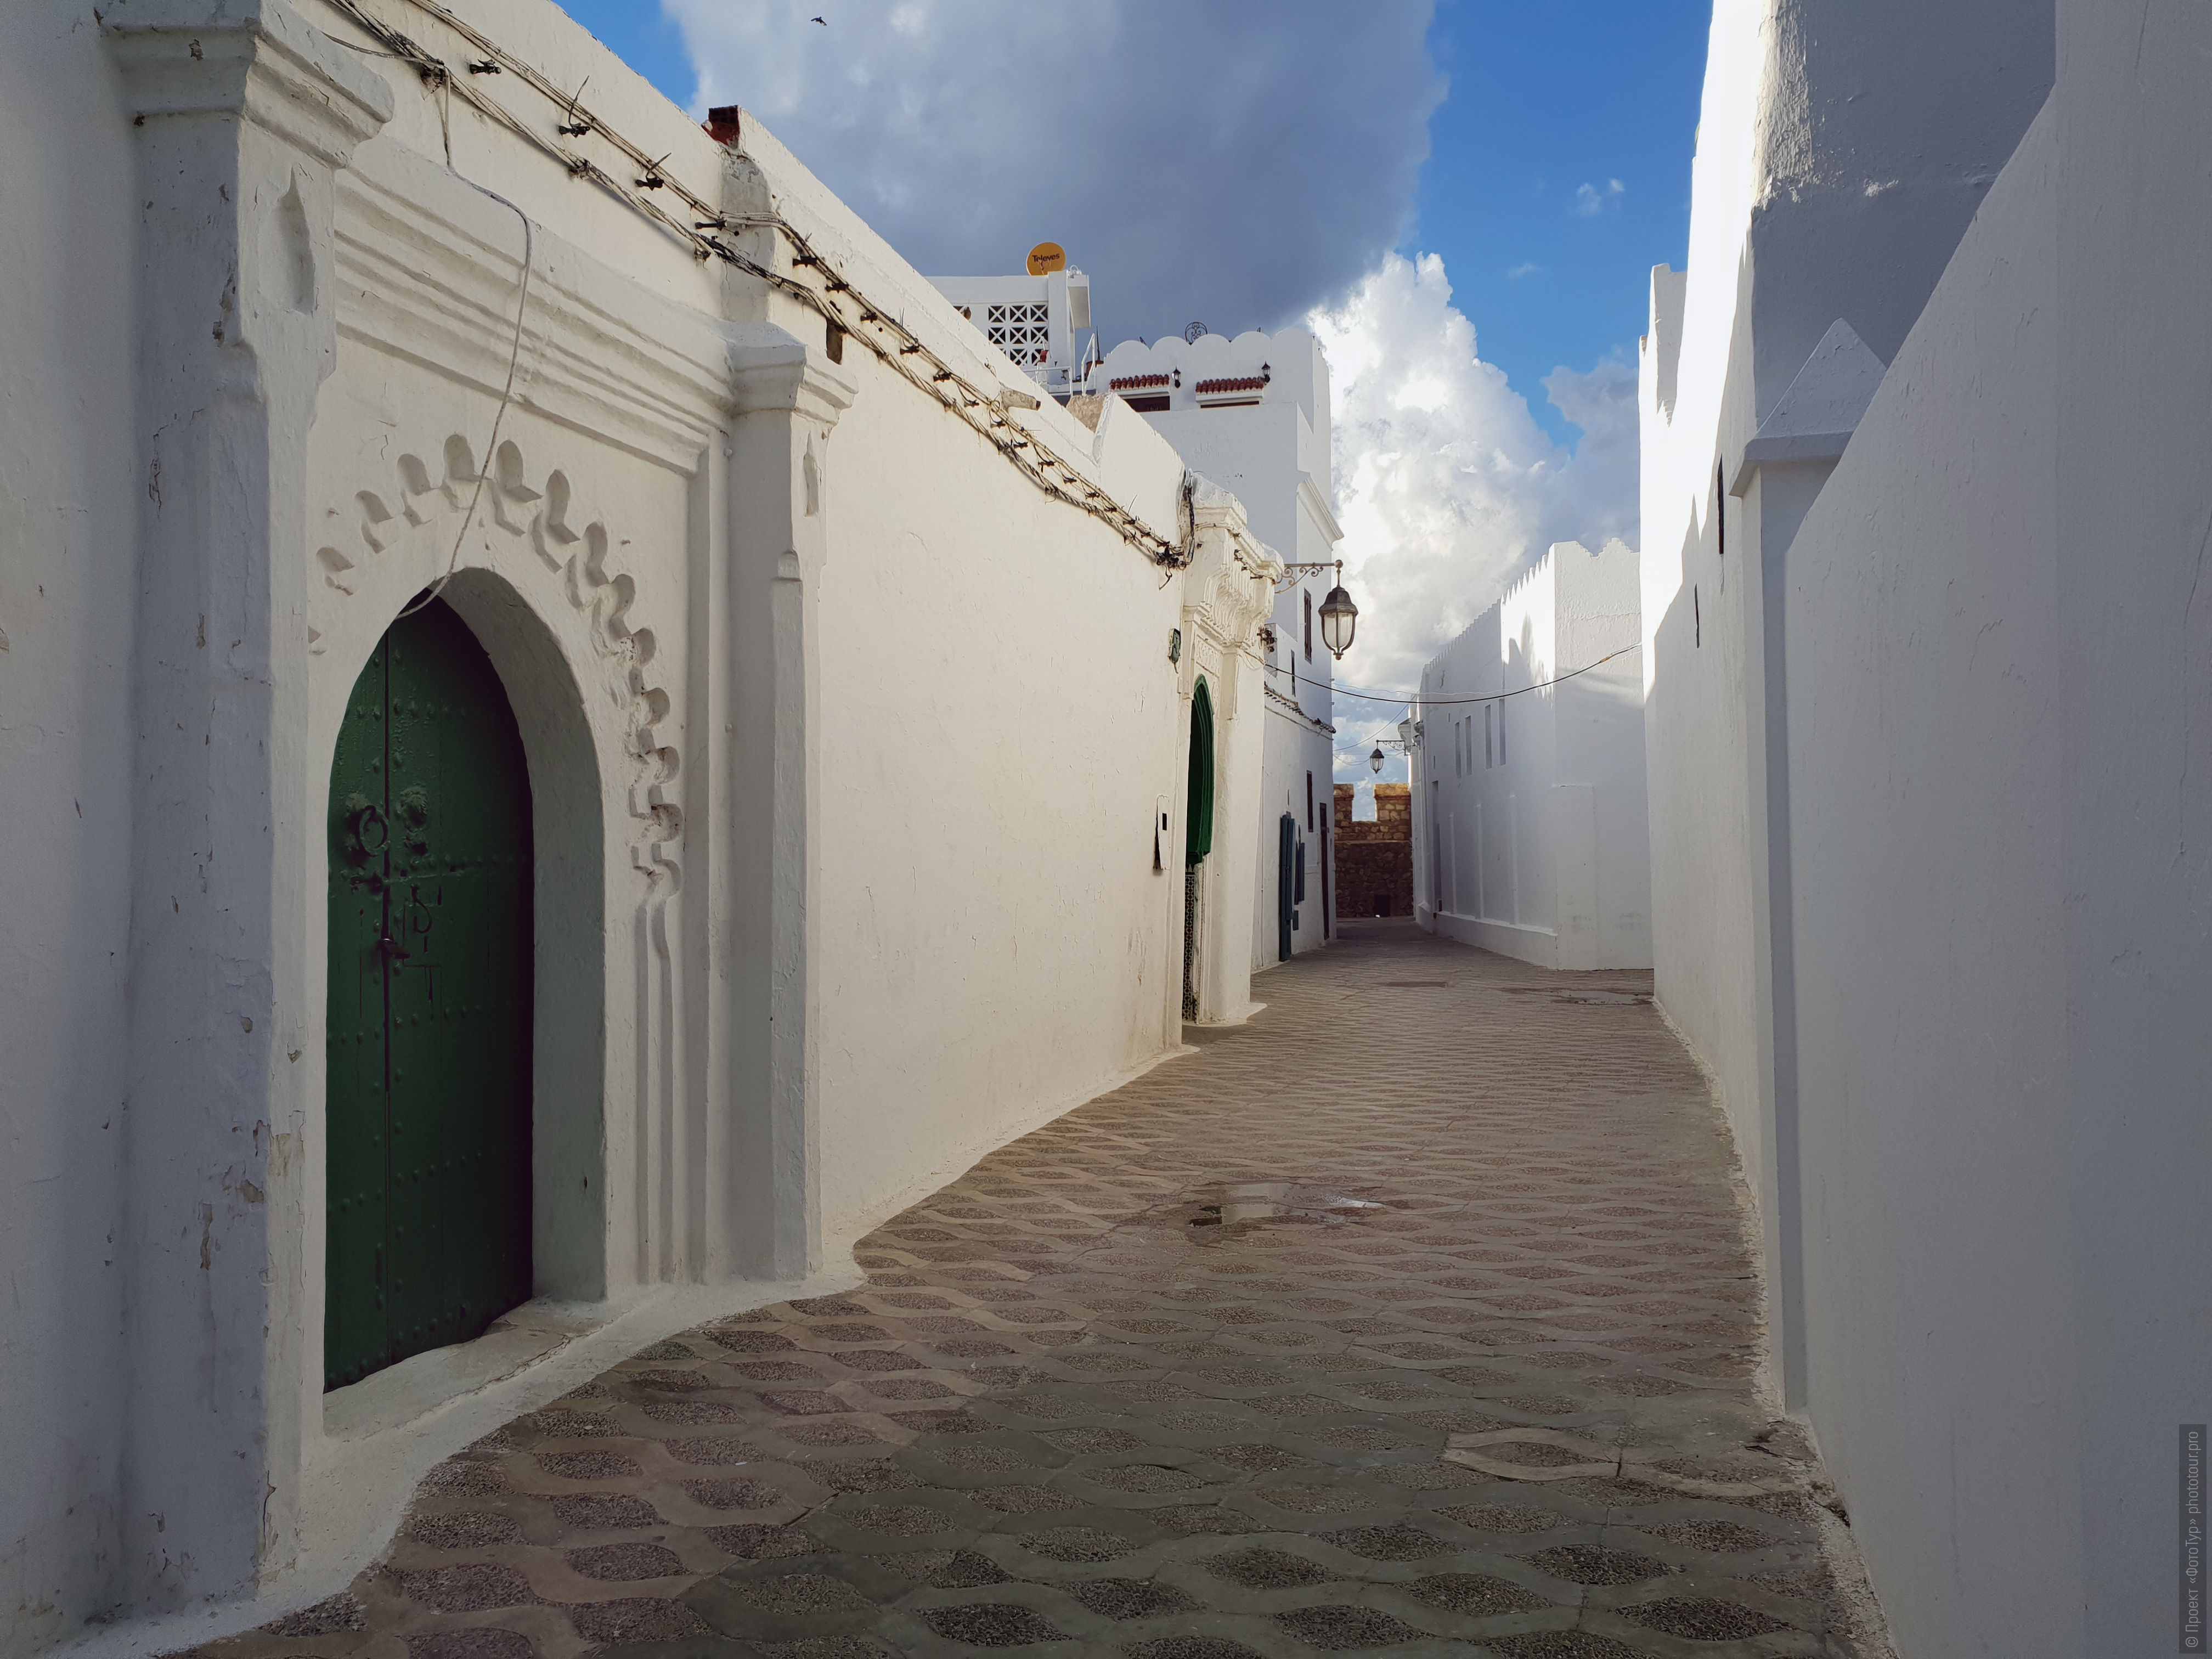 The narrow streets of Asila. Adventure photo tour: medina, cascades, sands and ports of Morocco, April 4 - 17, 2020.